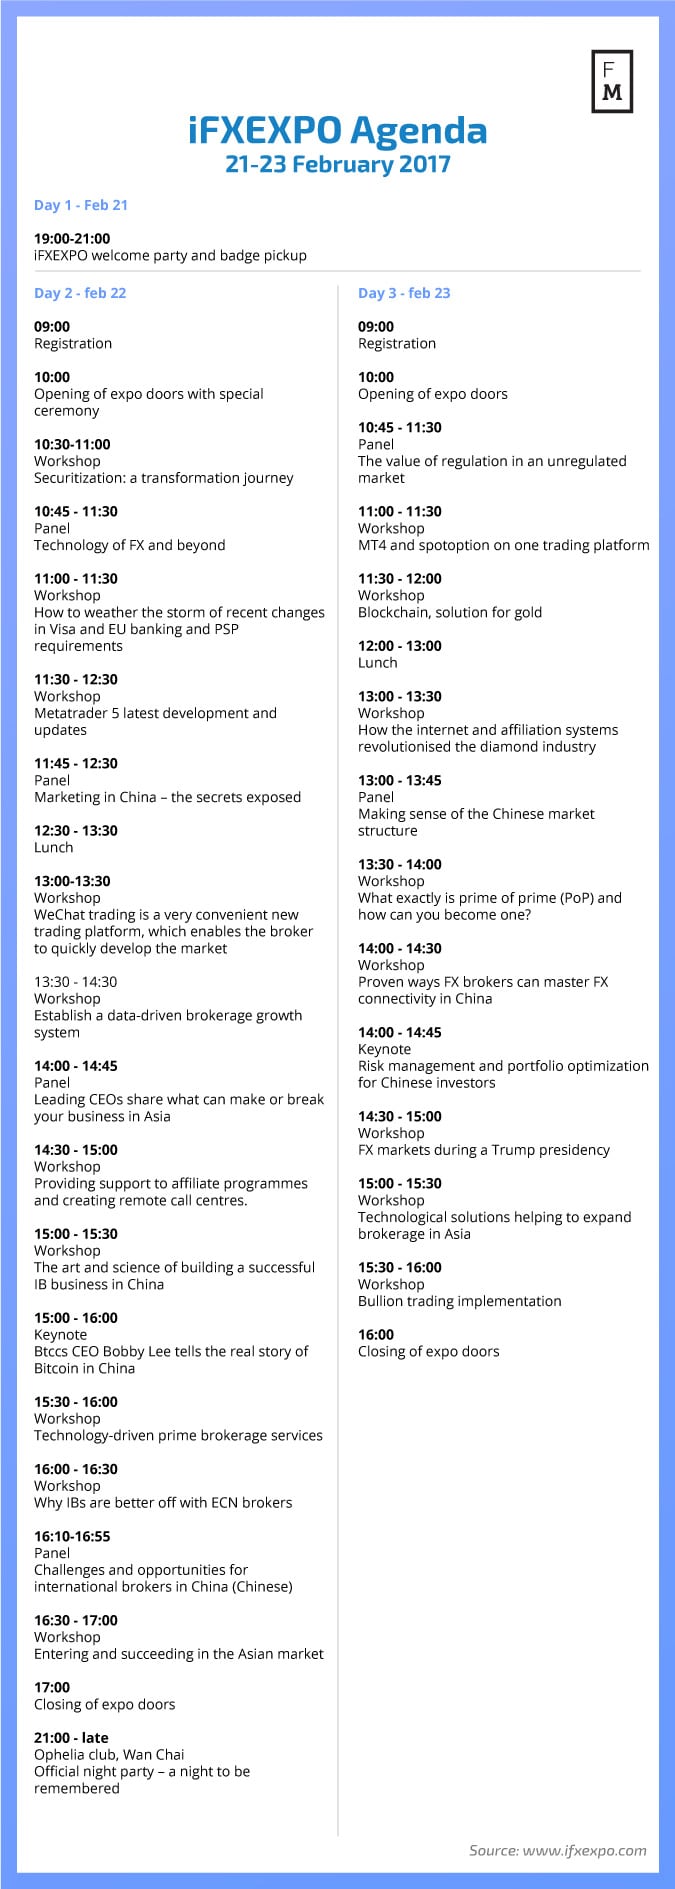 hk-event-agenda